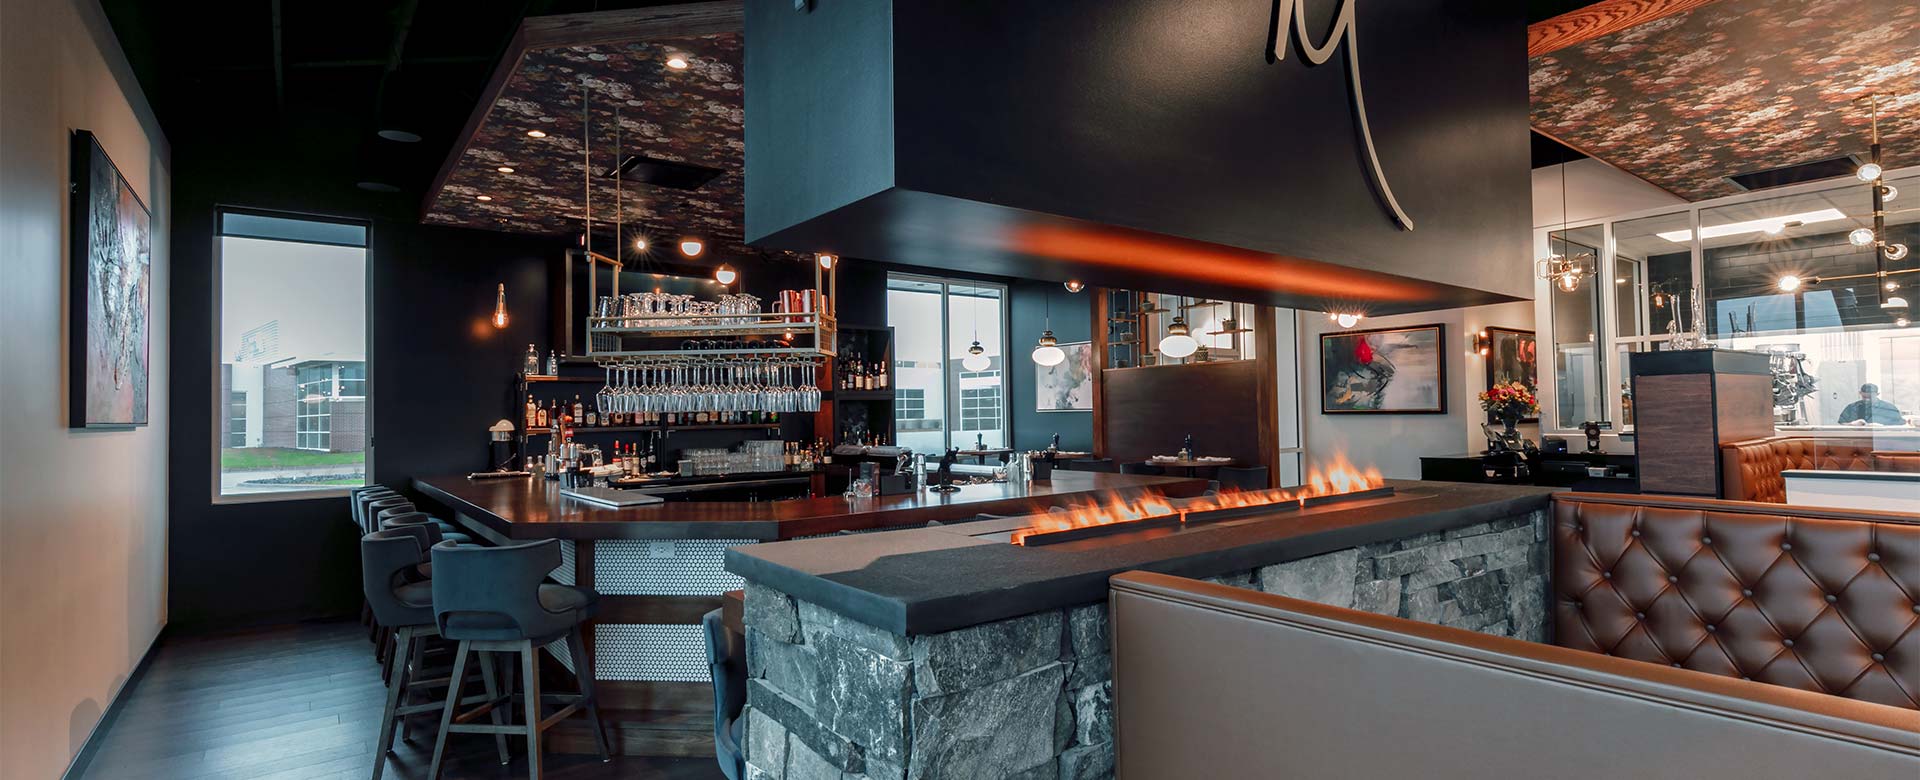 monarch kitchen and bar davenport iowa